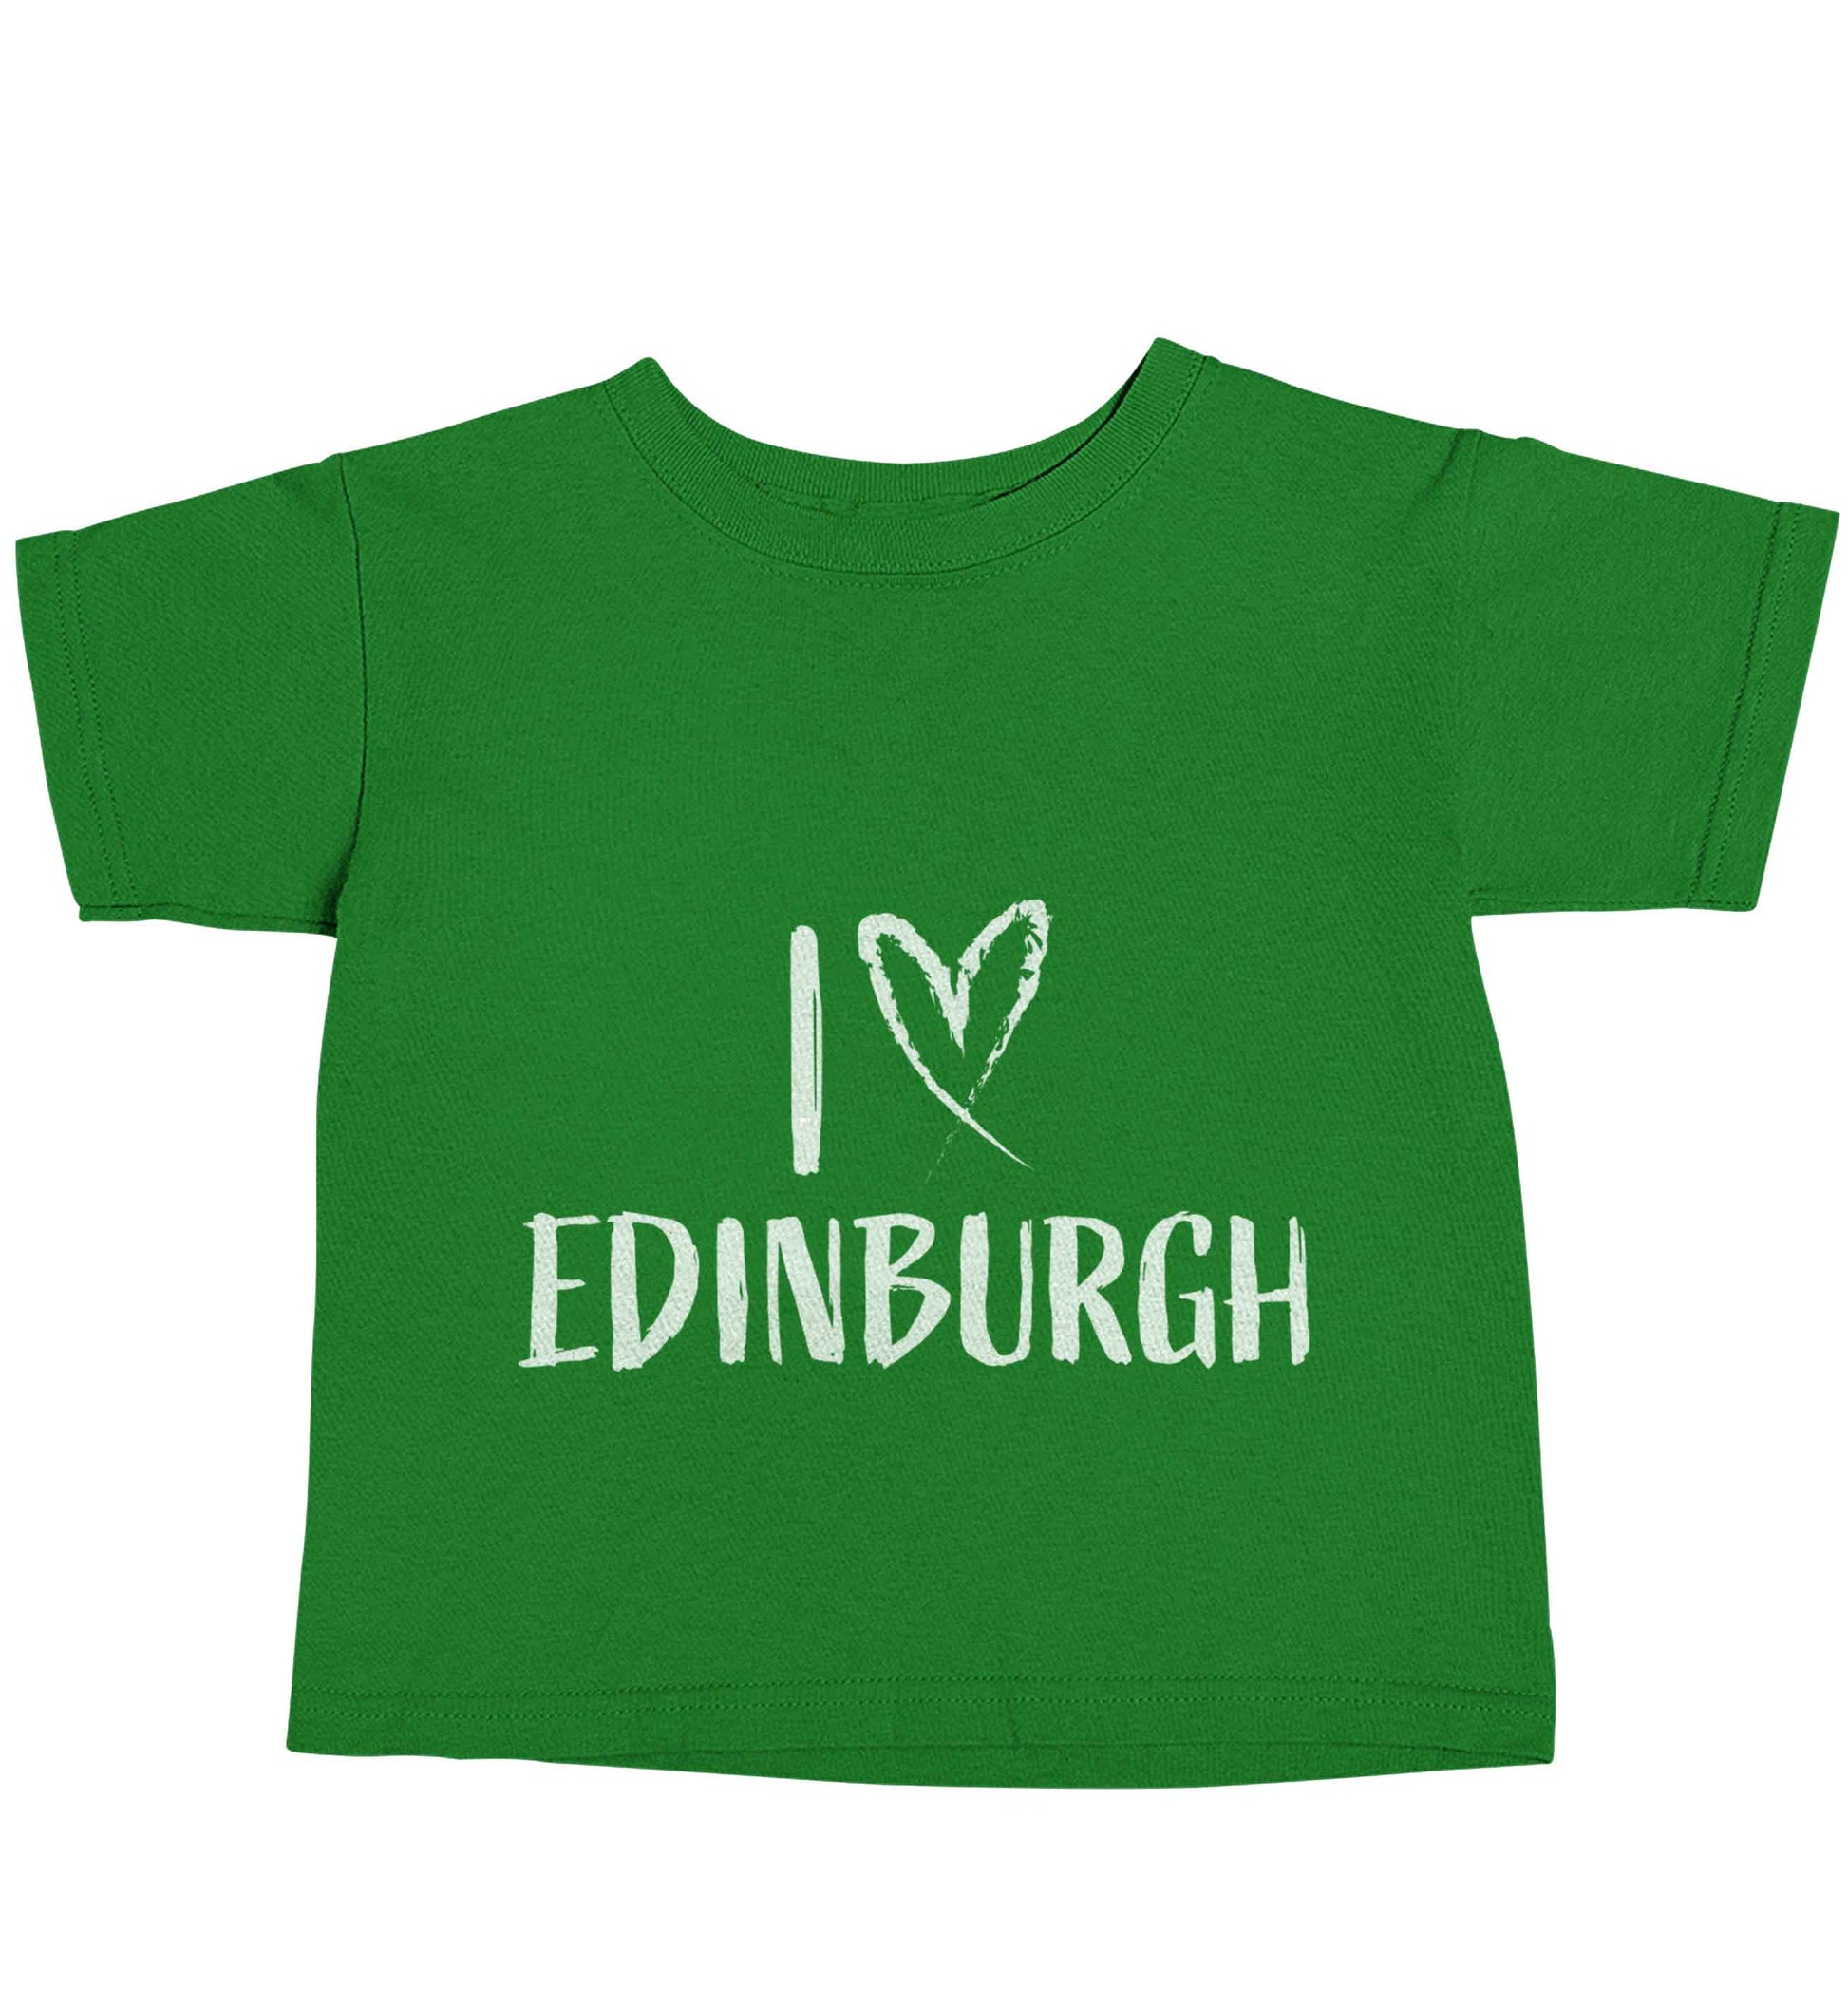 I love Edinburgh green baby toddler Tshirt 2 Years